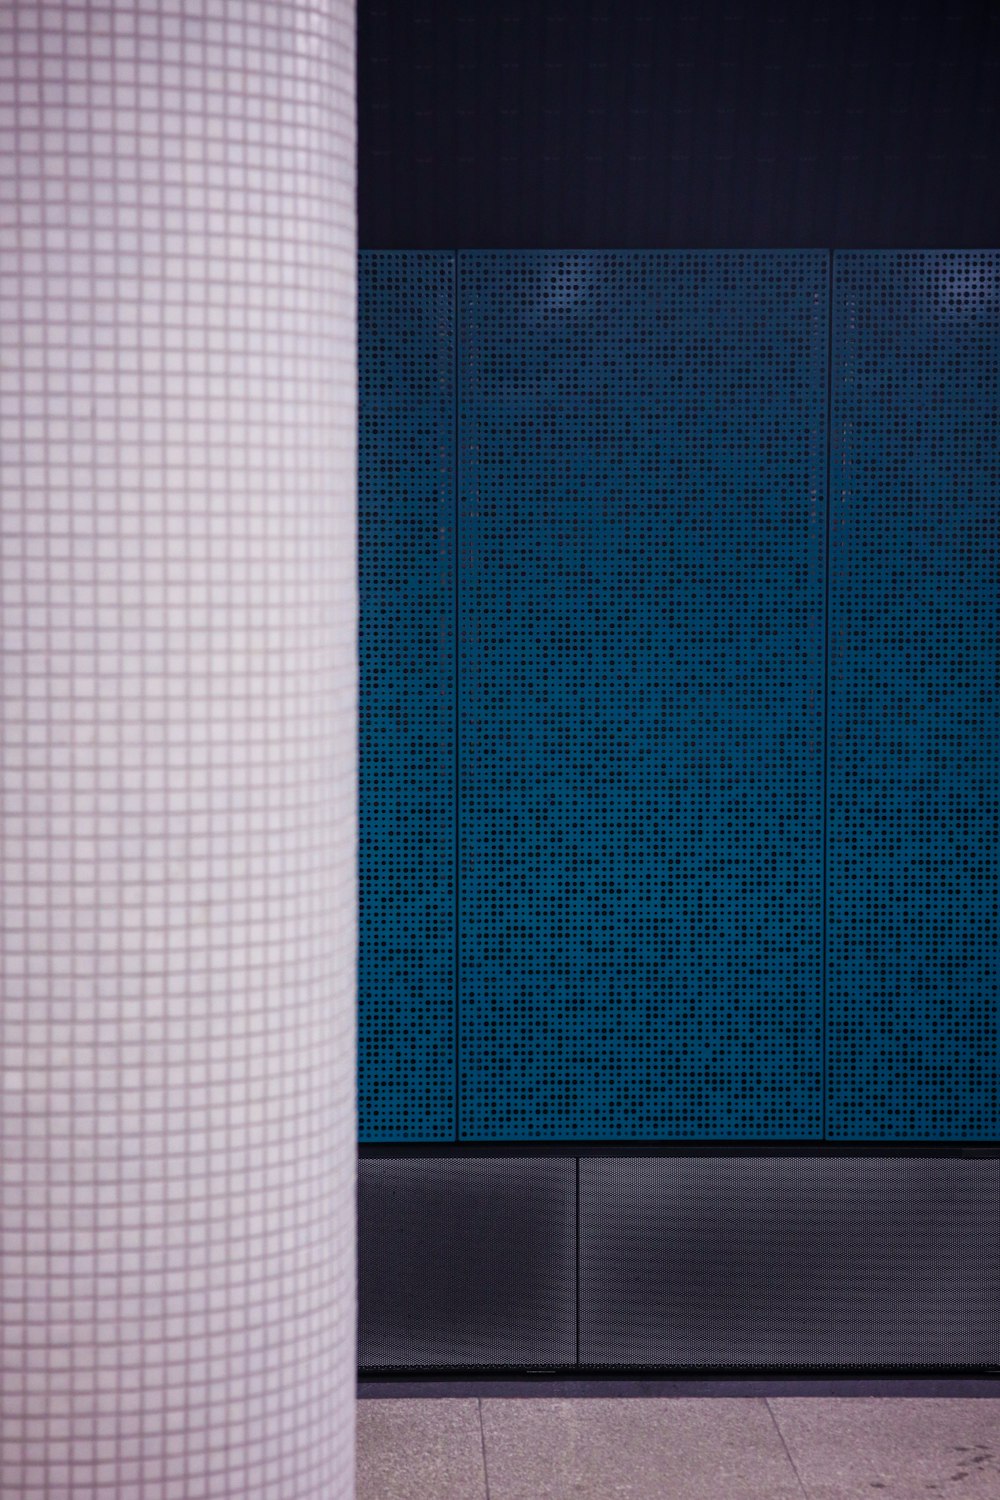 a blue tiled wall next to a white pillar